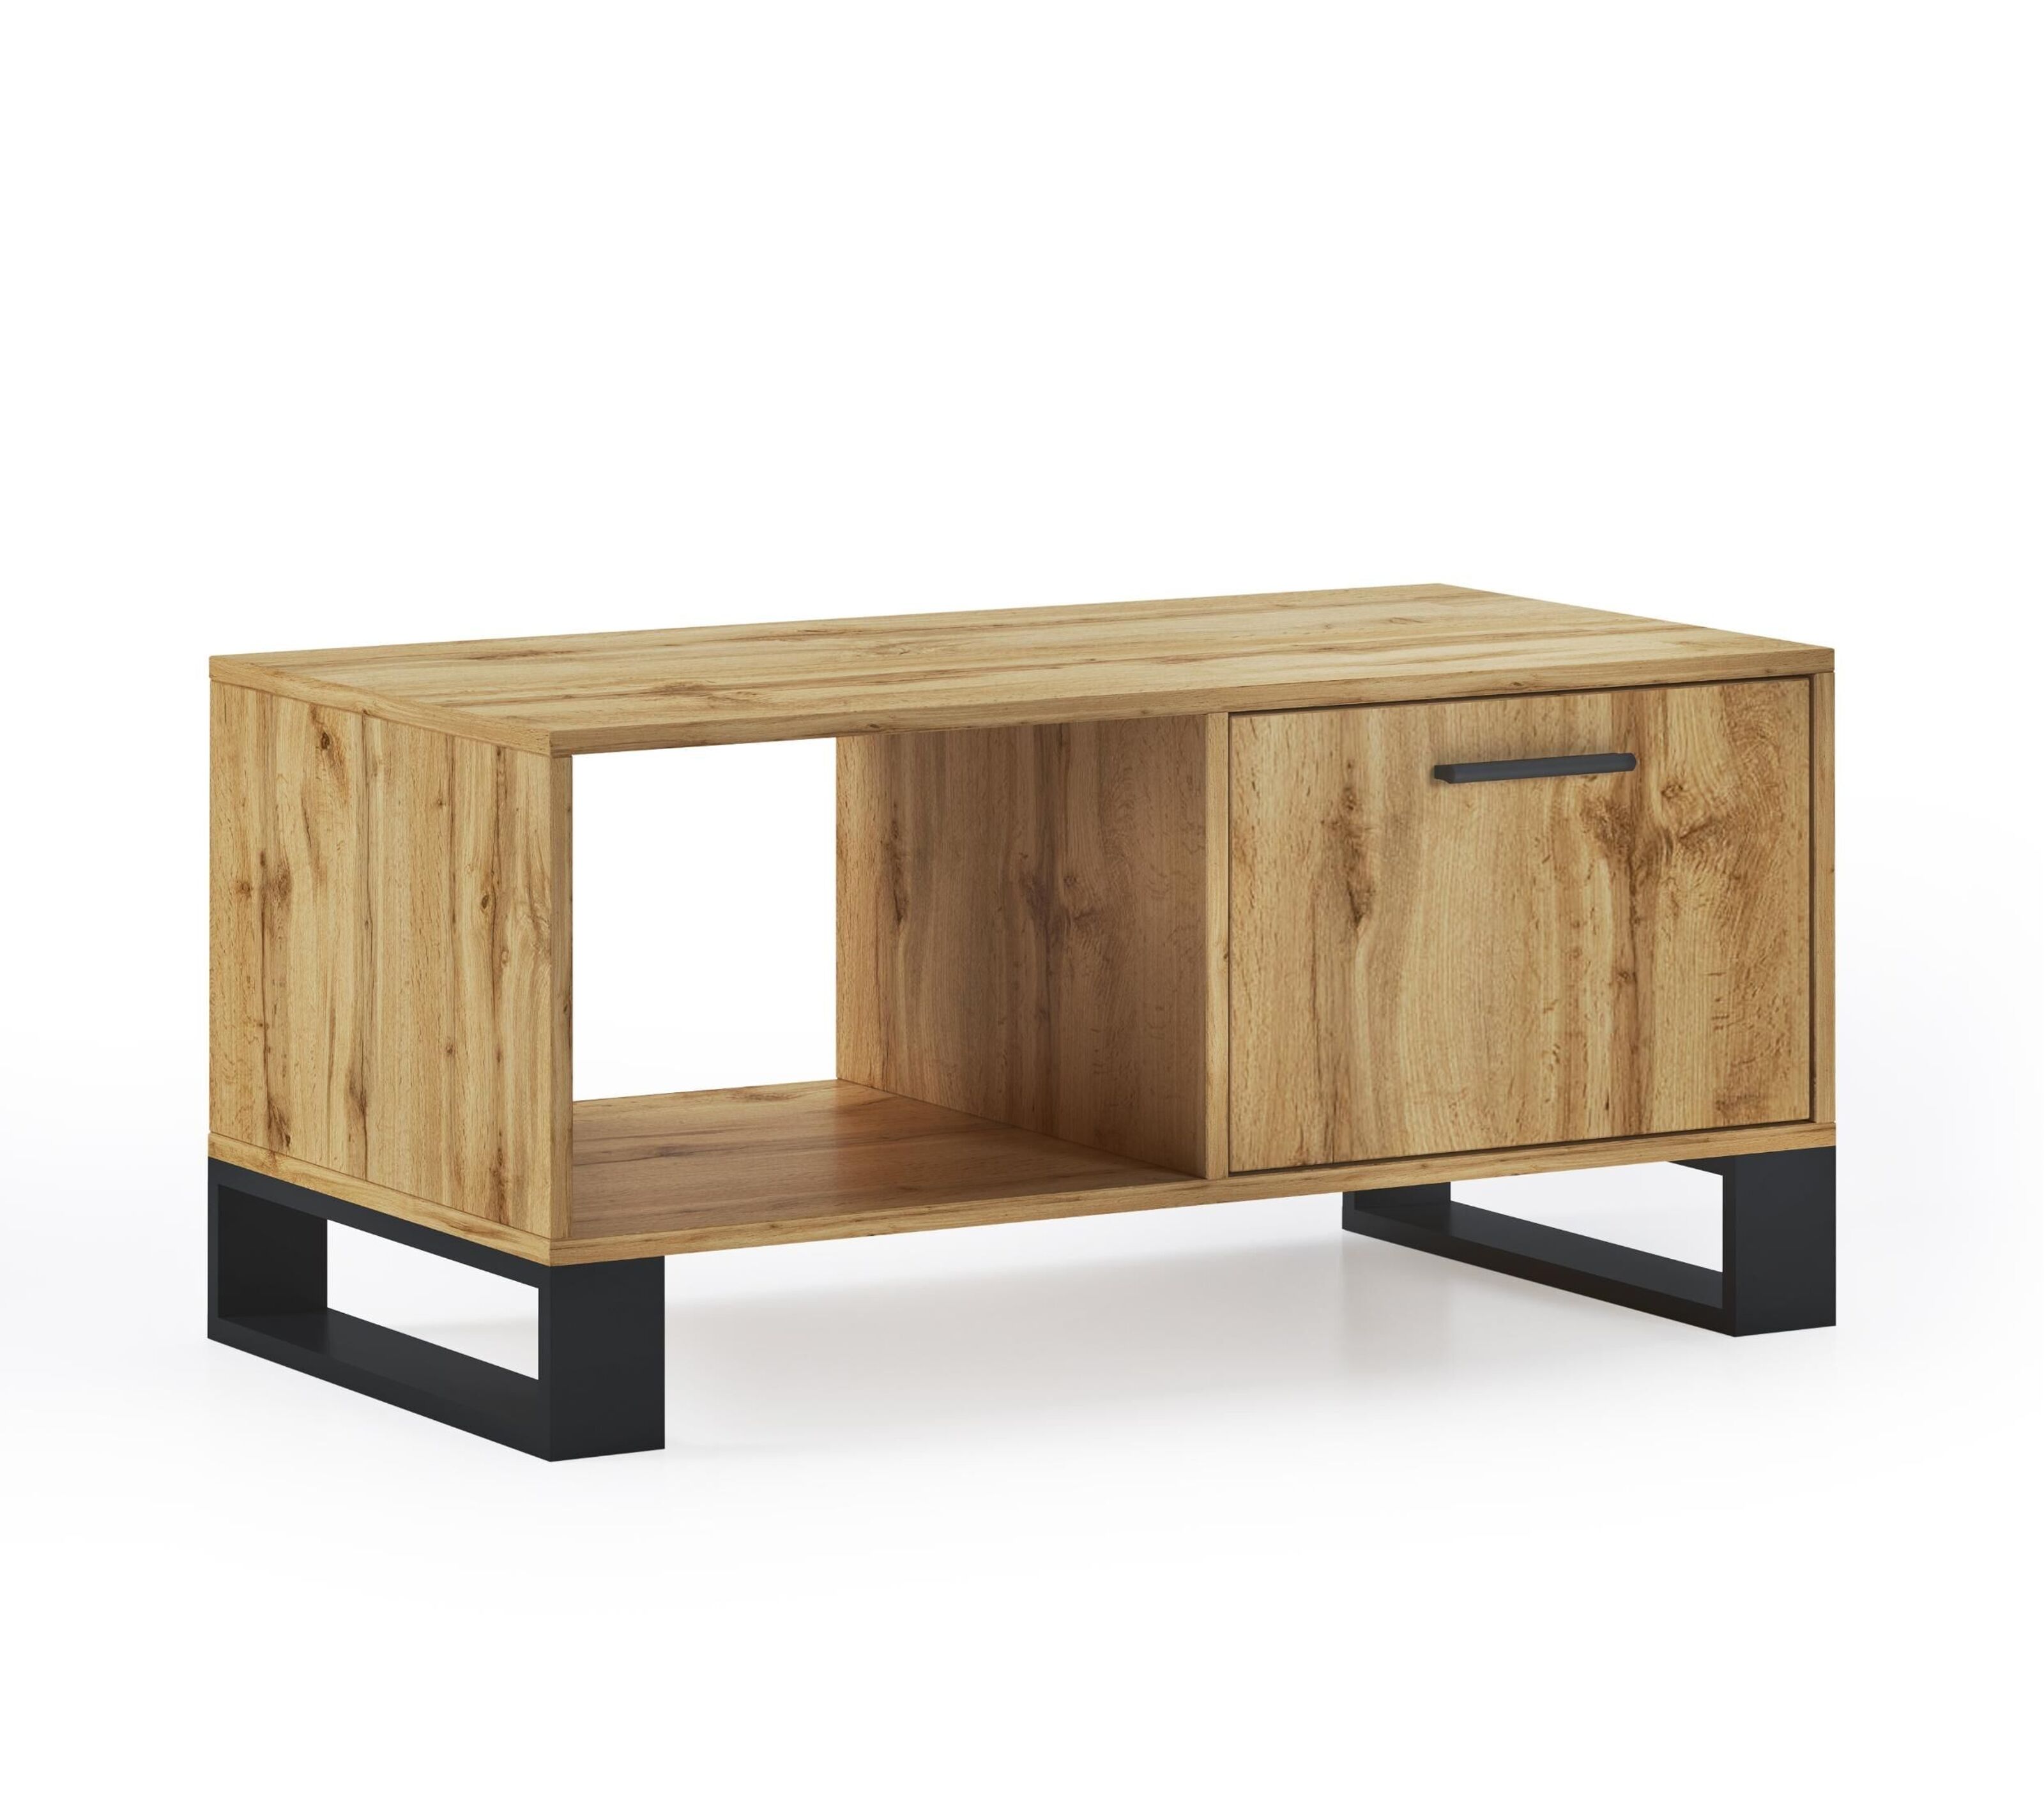 Buy wholesale Skraut Home - Coffee table with doors, living room, LOFT  model, structure and doors in Rustic Oak color, measurements 92x50x45cm  high.